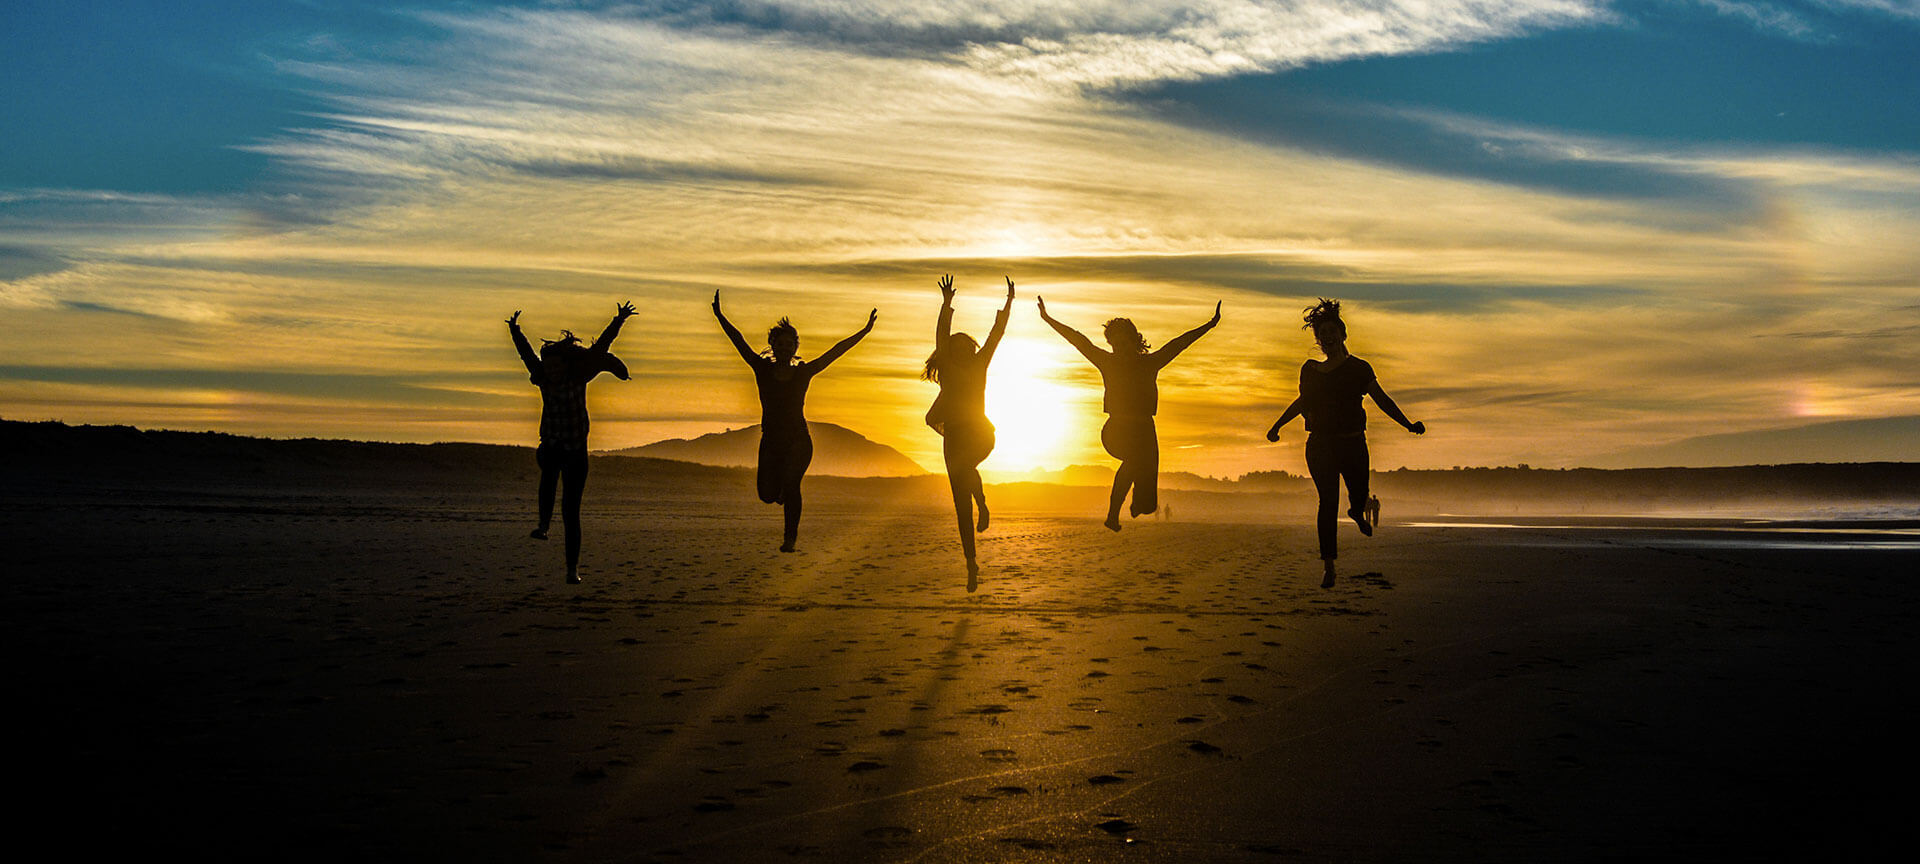 Springende mensen tijdens zonsondergang op strand.